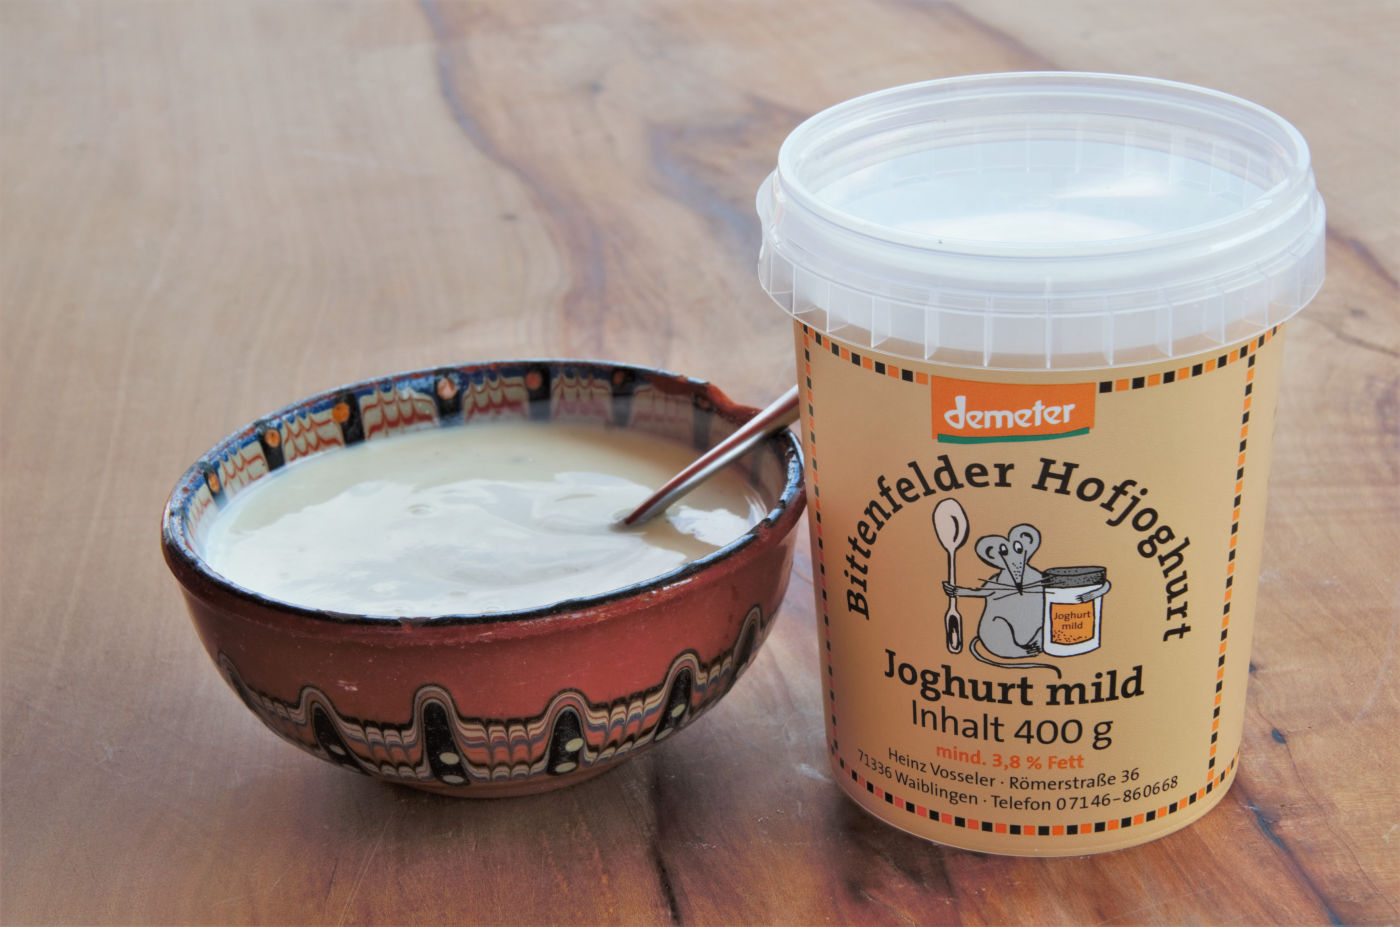 Joghurt mild